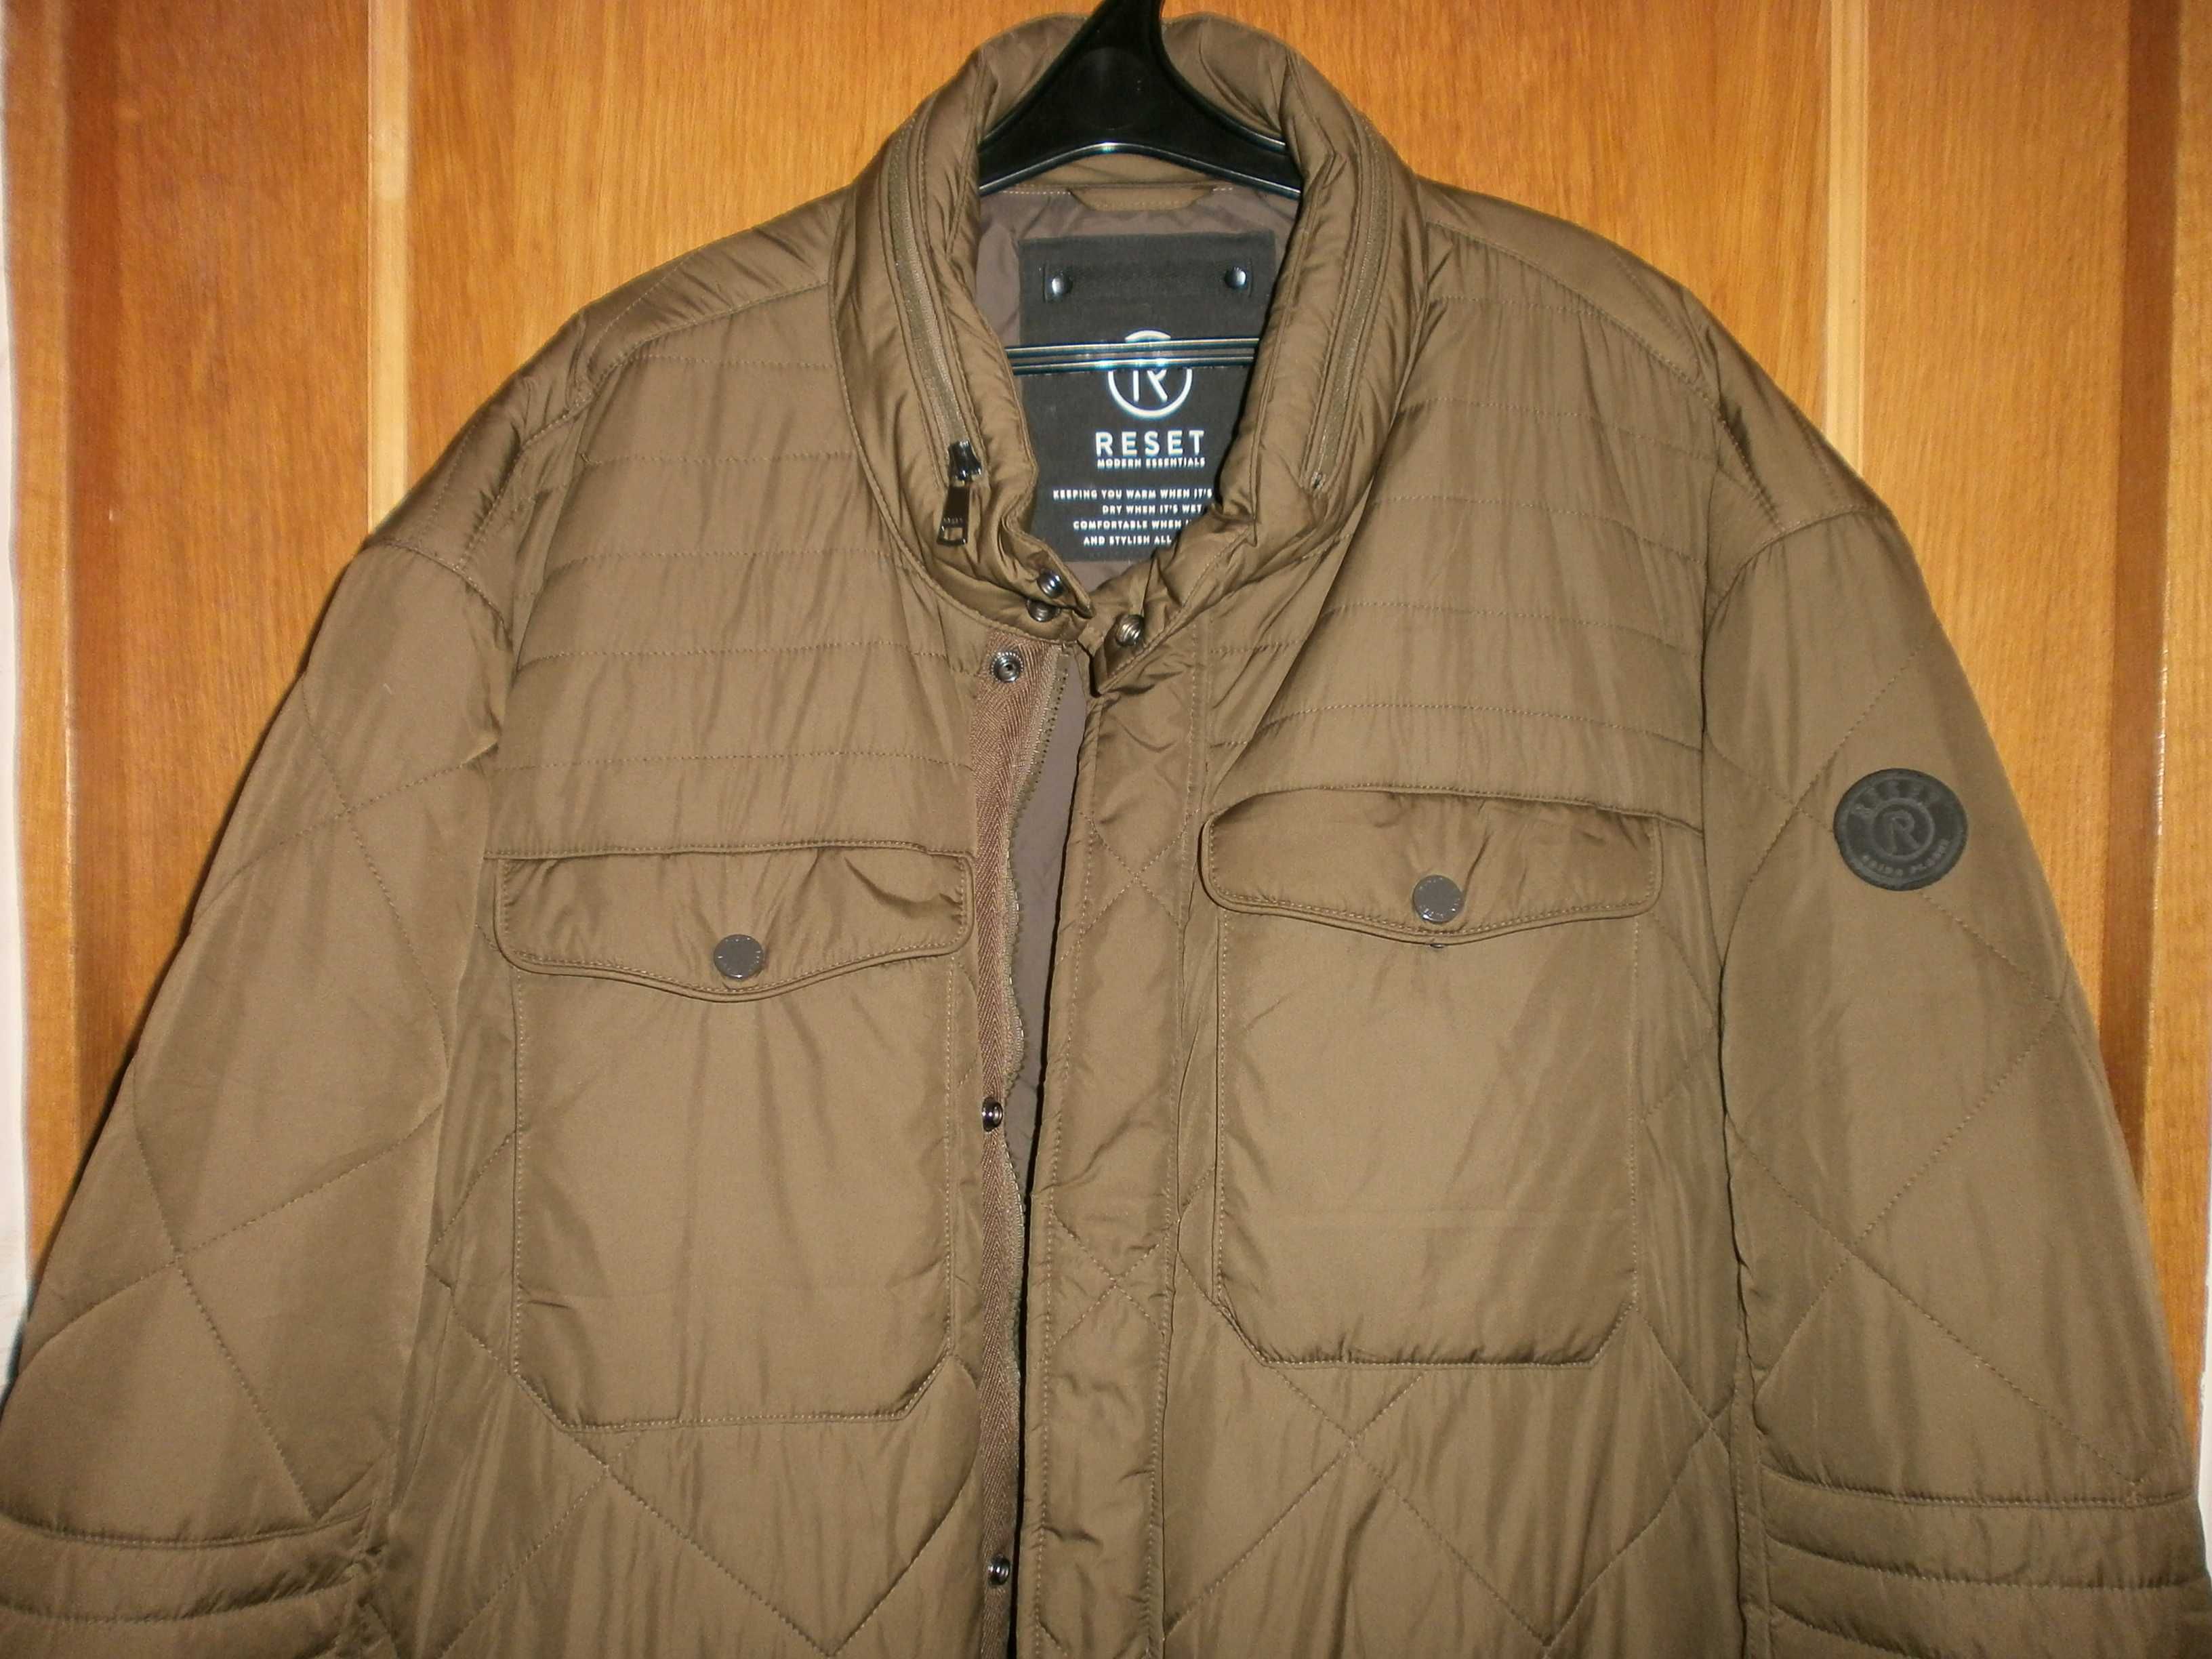 Большой размер. Куртка Reset, олива, разм. 5XL, наш 70. ПОГ-80 см.